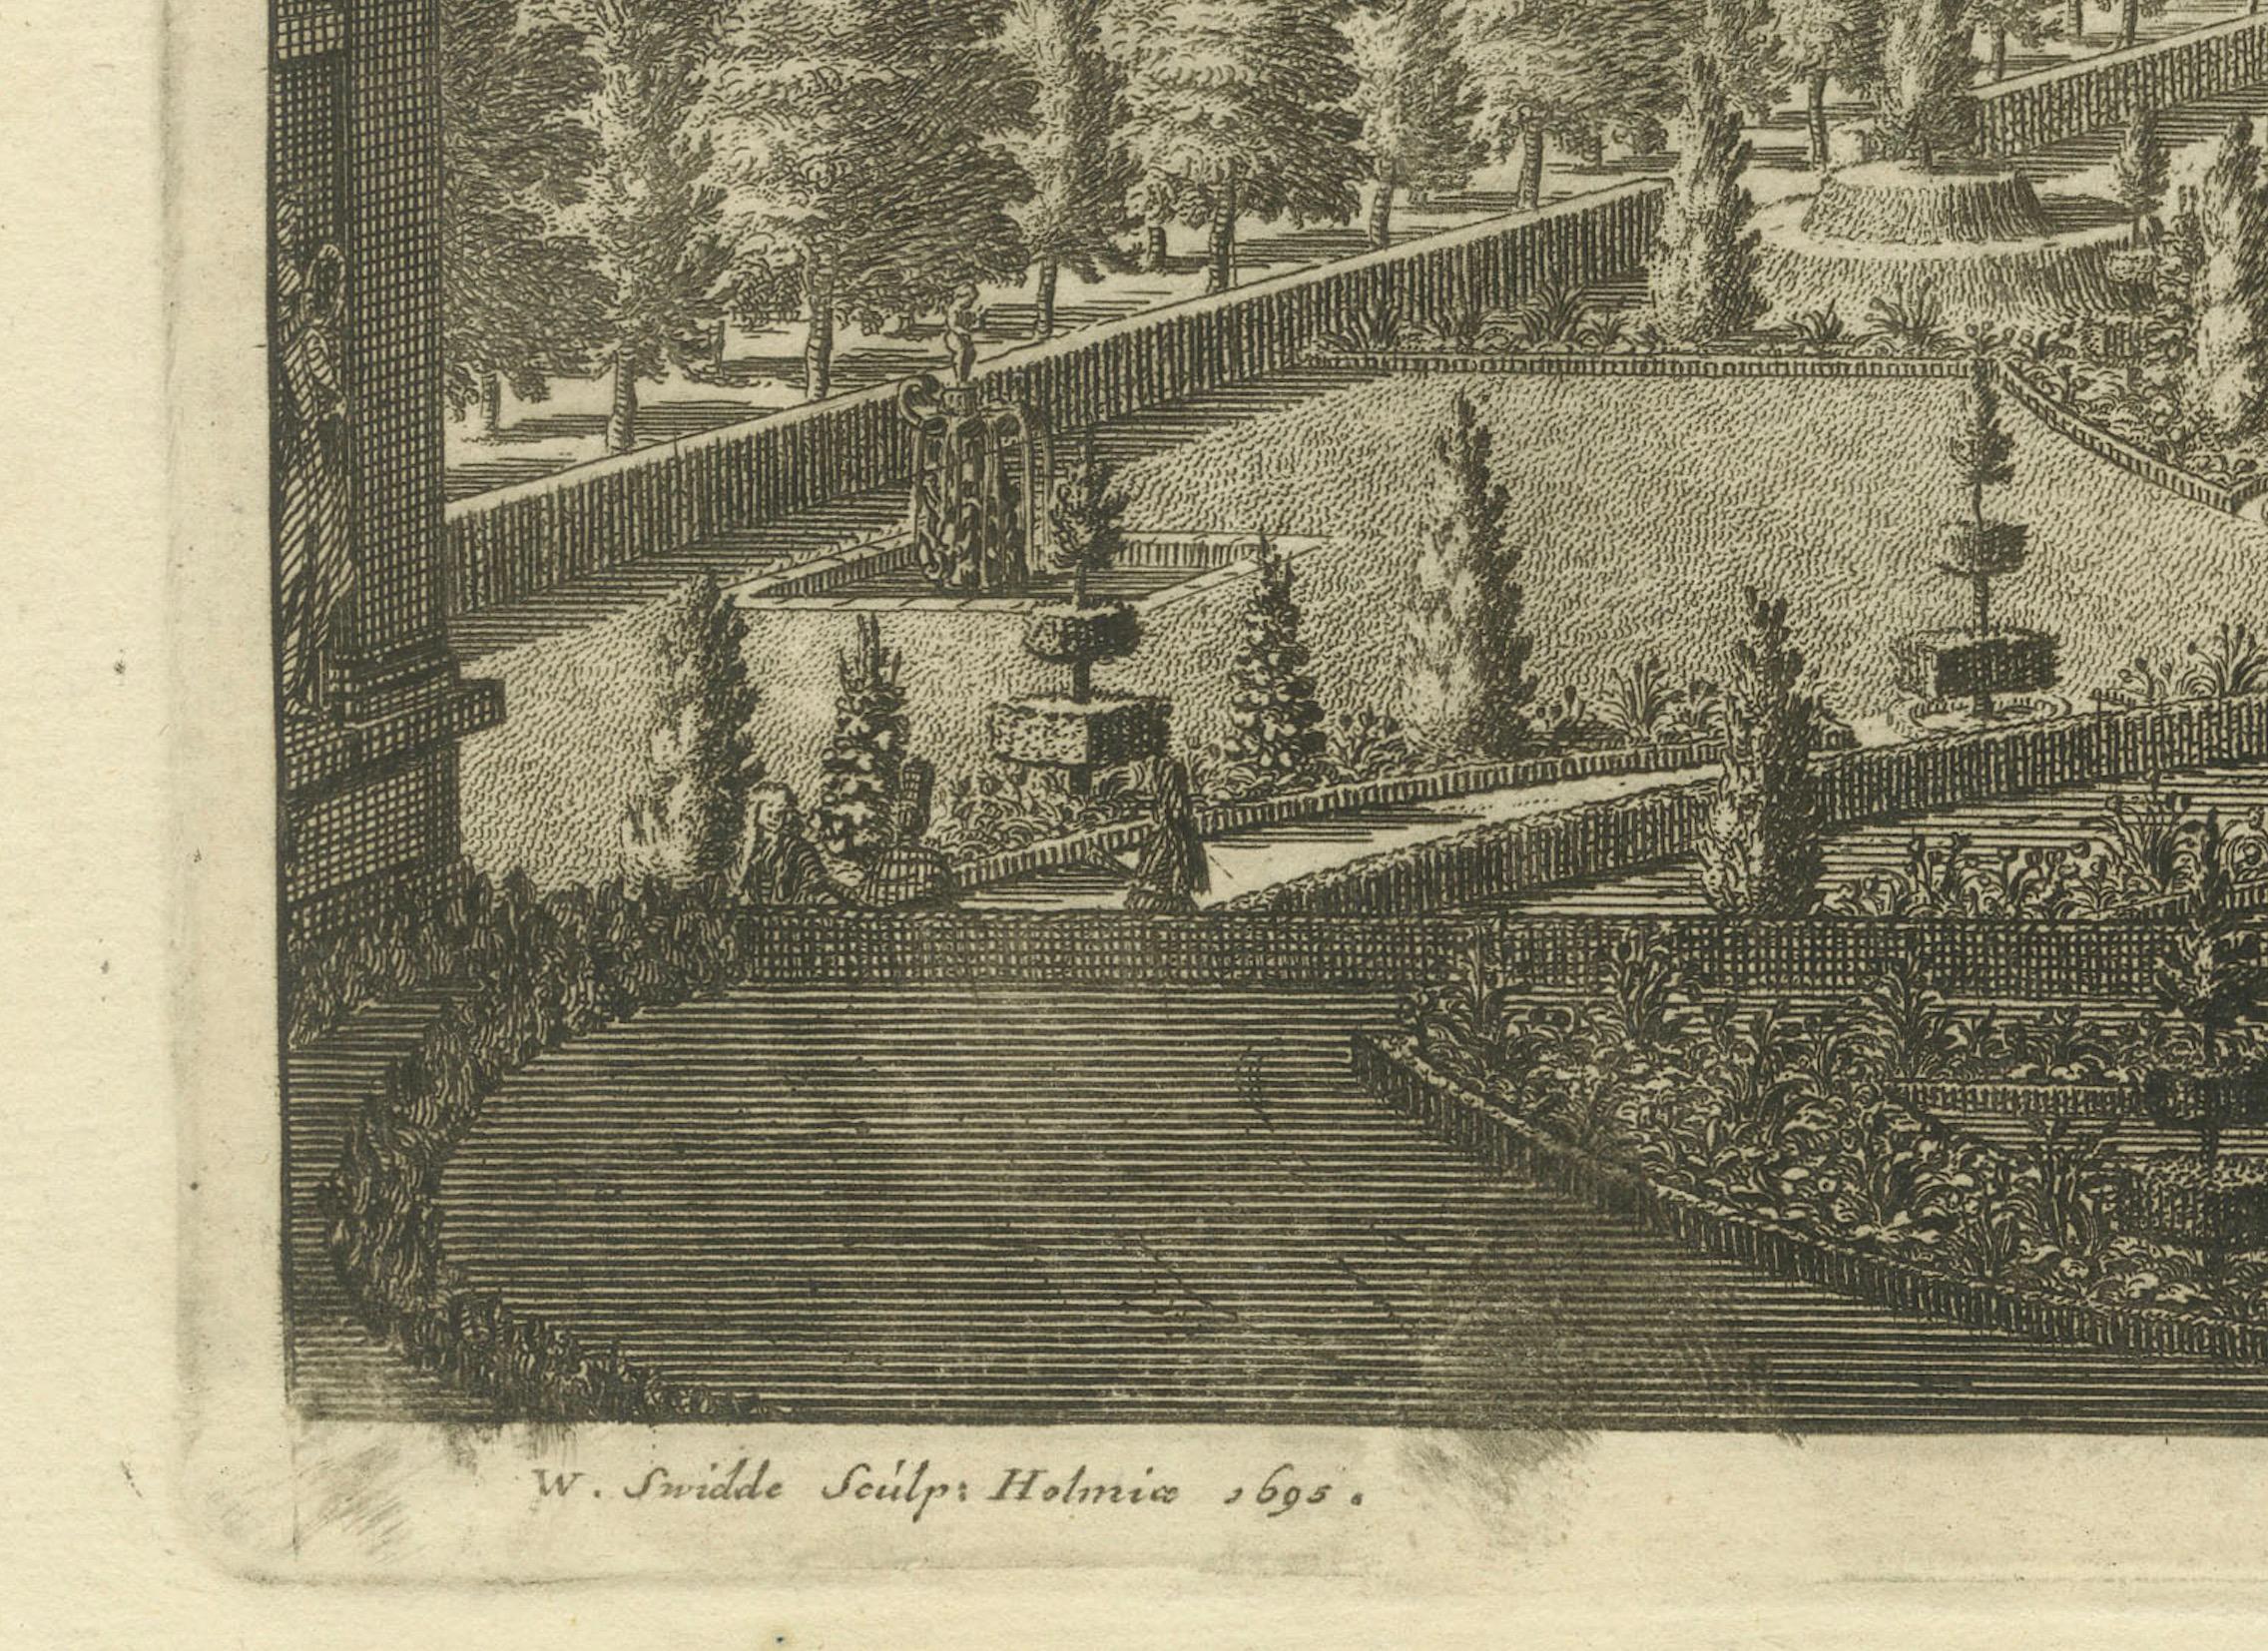 Engraved The Ekolsund Castle and Gardens in Sweden in Swidde's 1695 Engraving For Sale